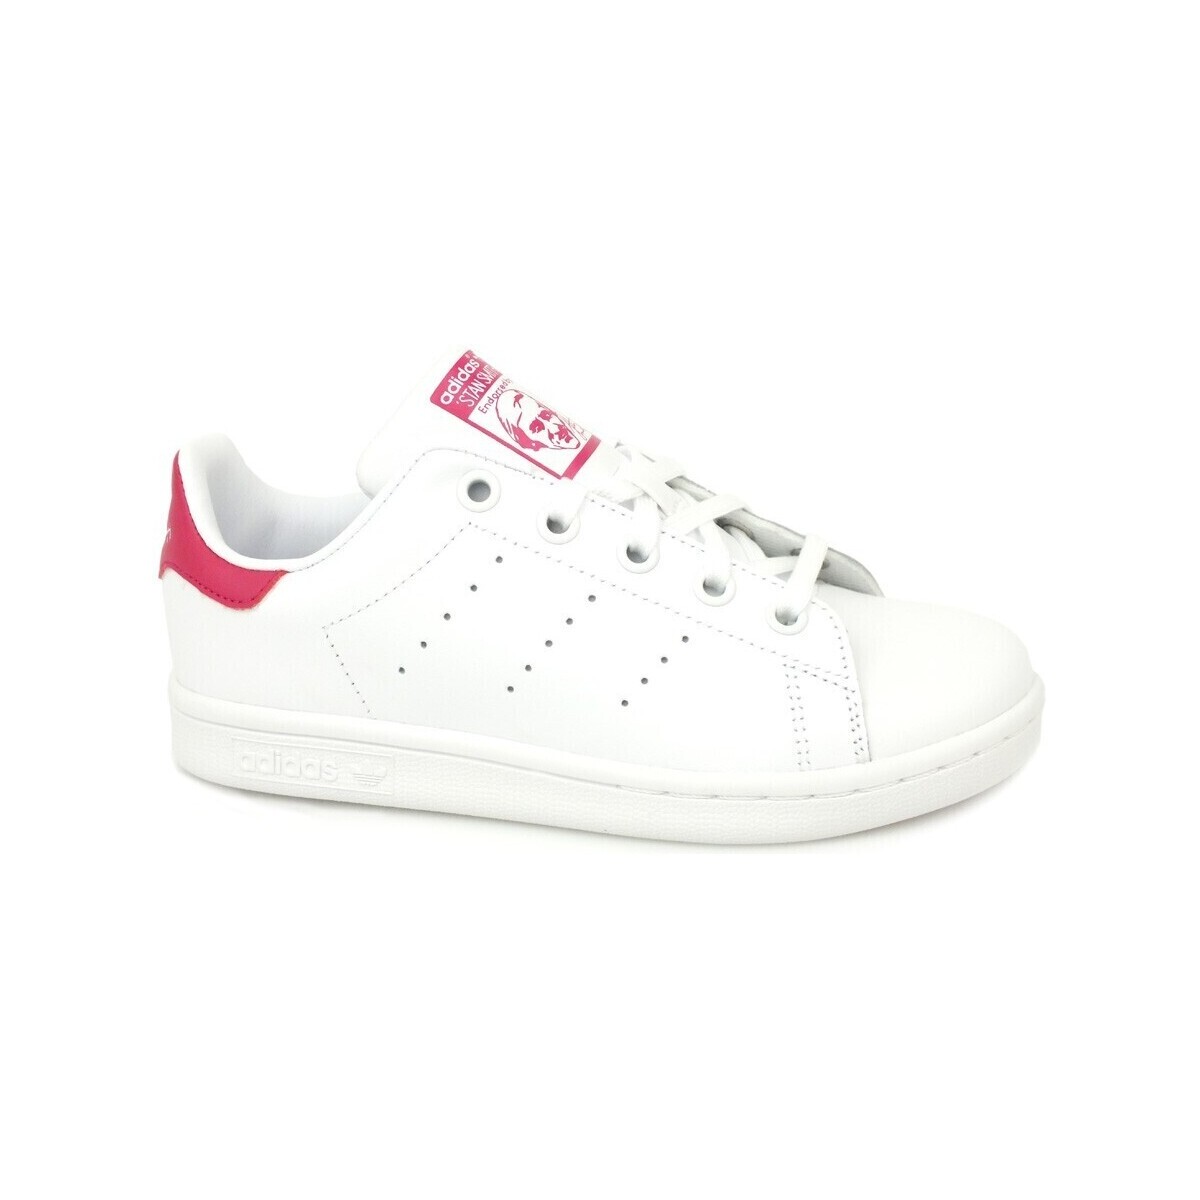 Chaussures de sport adidas Originals Stan Smith White Pink BA8377 26778330 1200 A